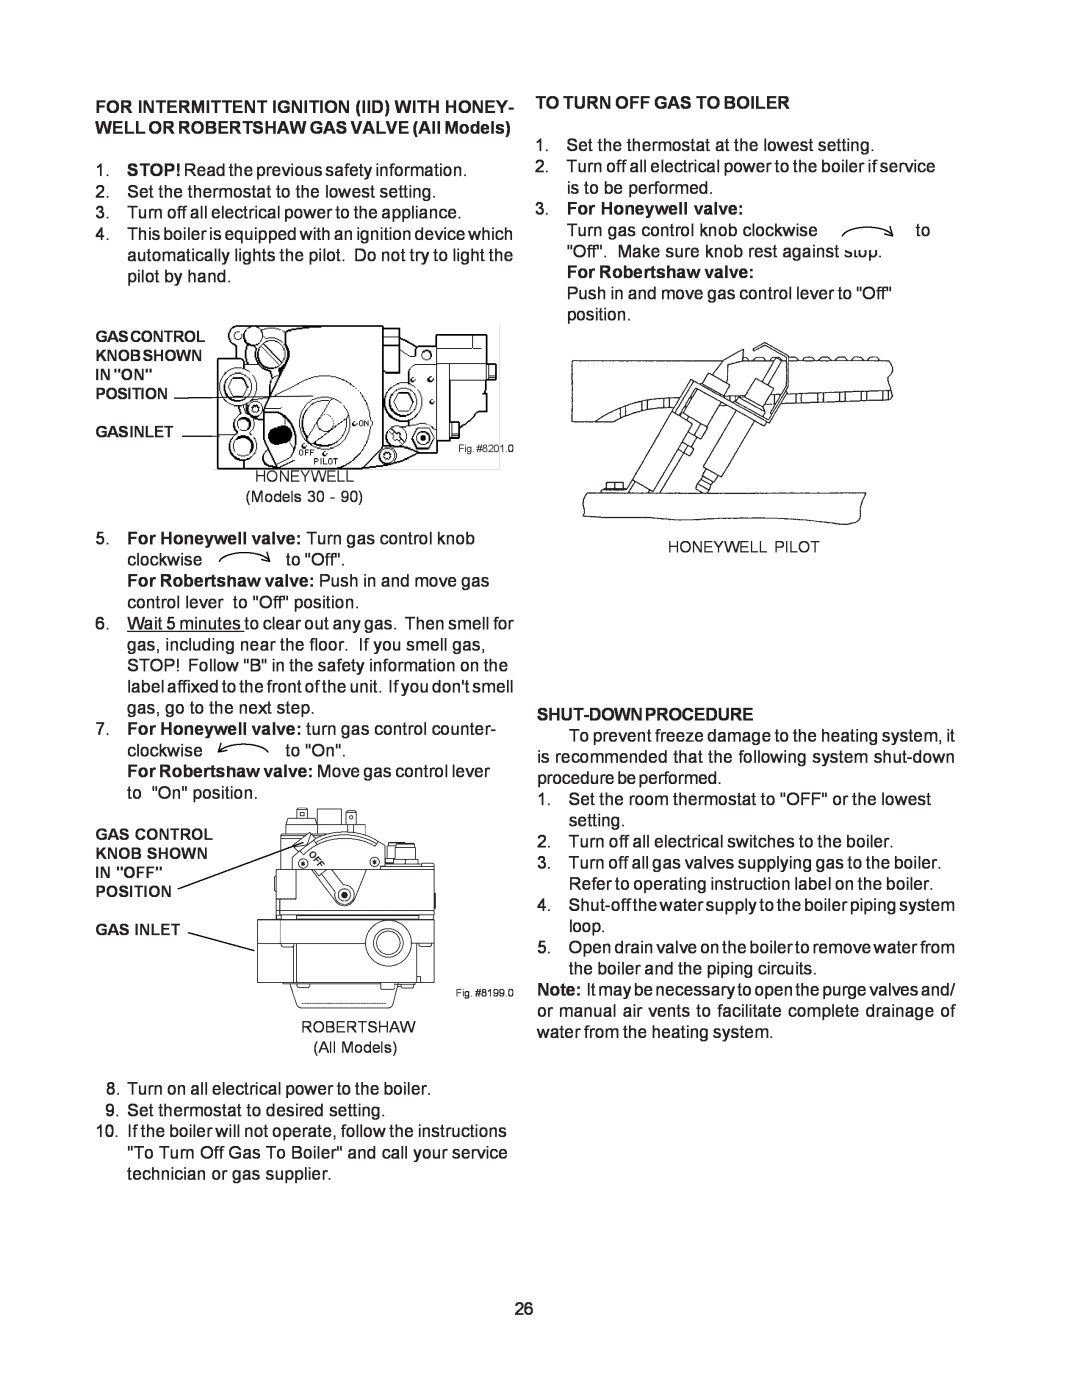 Raypak 0042B, 0066B, 0180B manual To Turn Off Gas To Boiler, For Honeywell valve, For Robertshaw valve, Shut-Downprocedure 